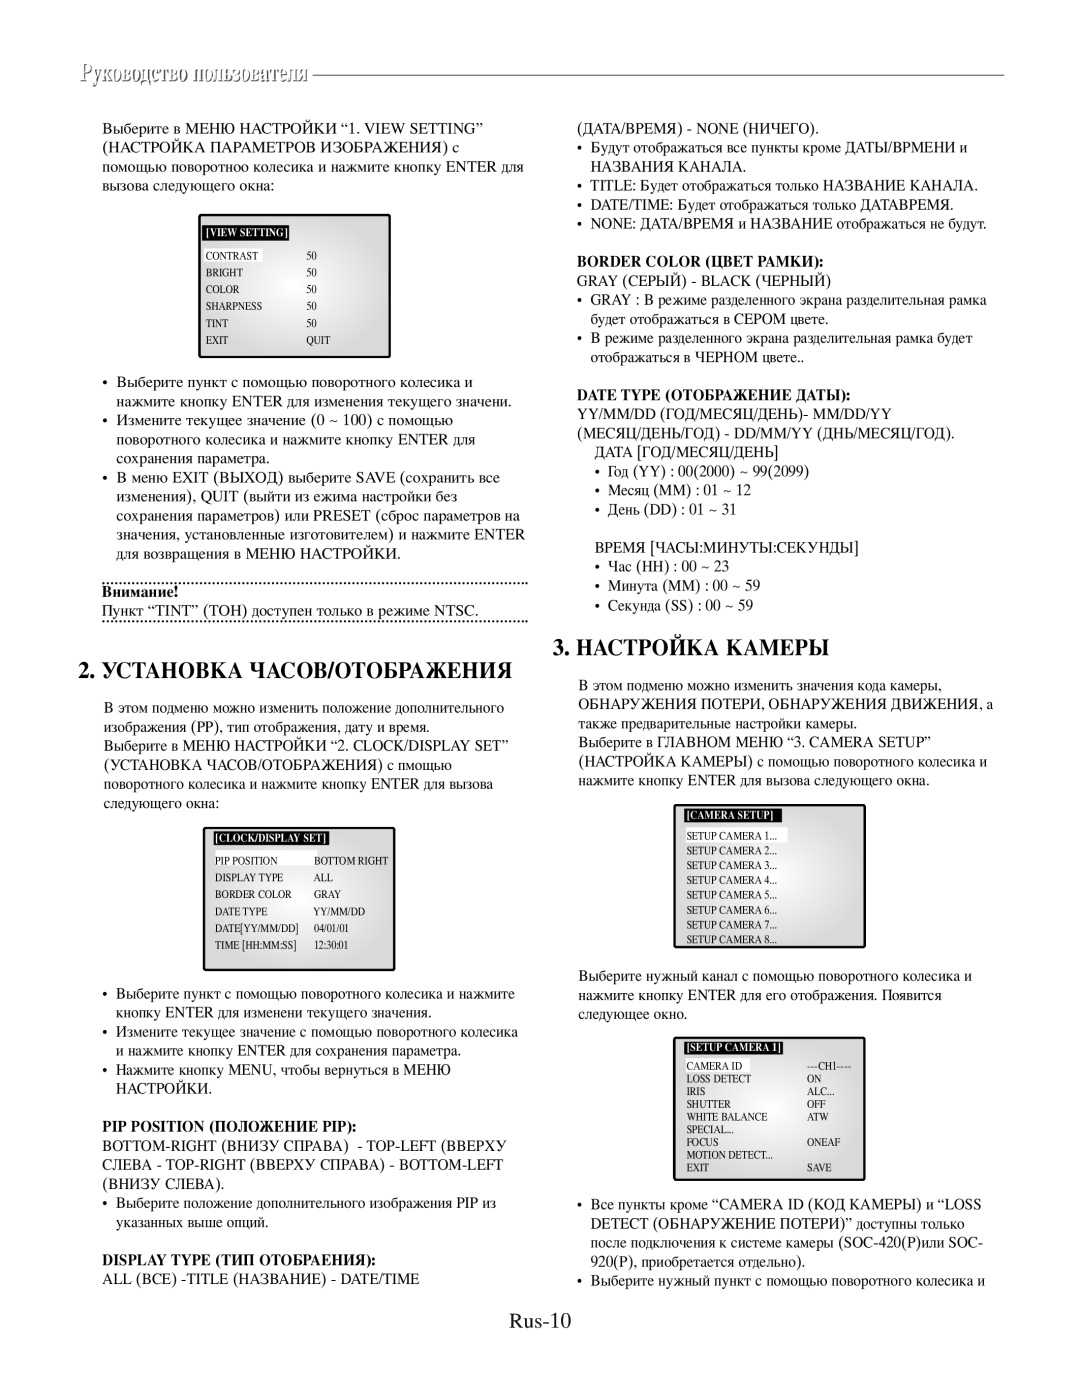 Samsung SMO-210TRP manual 2. УАА, оводство пользователя, Rus-10, Pip Position, Display Type А, Border Color А, Date Type Оа 